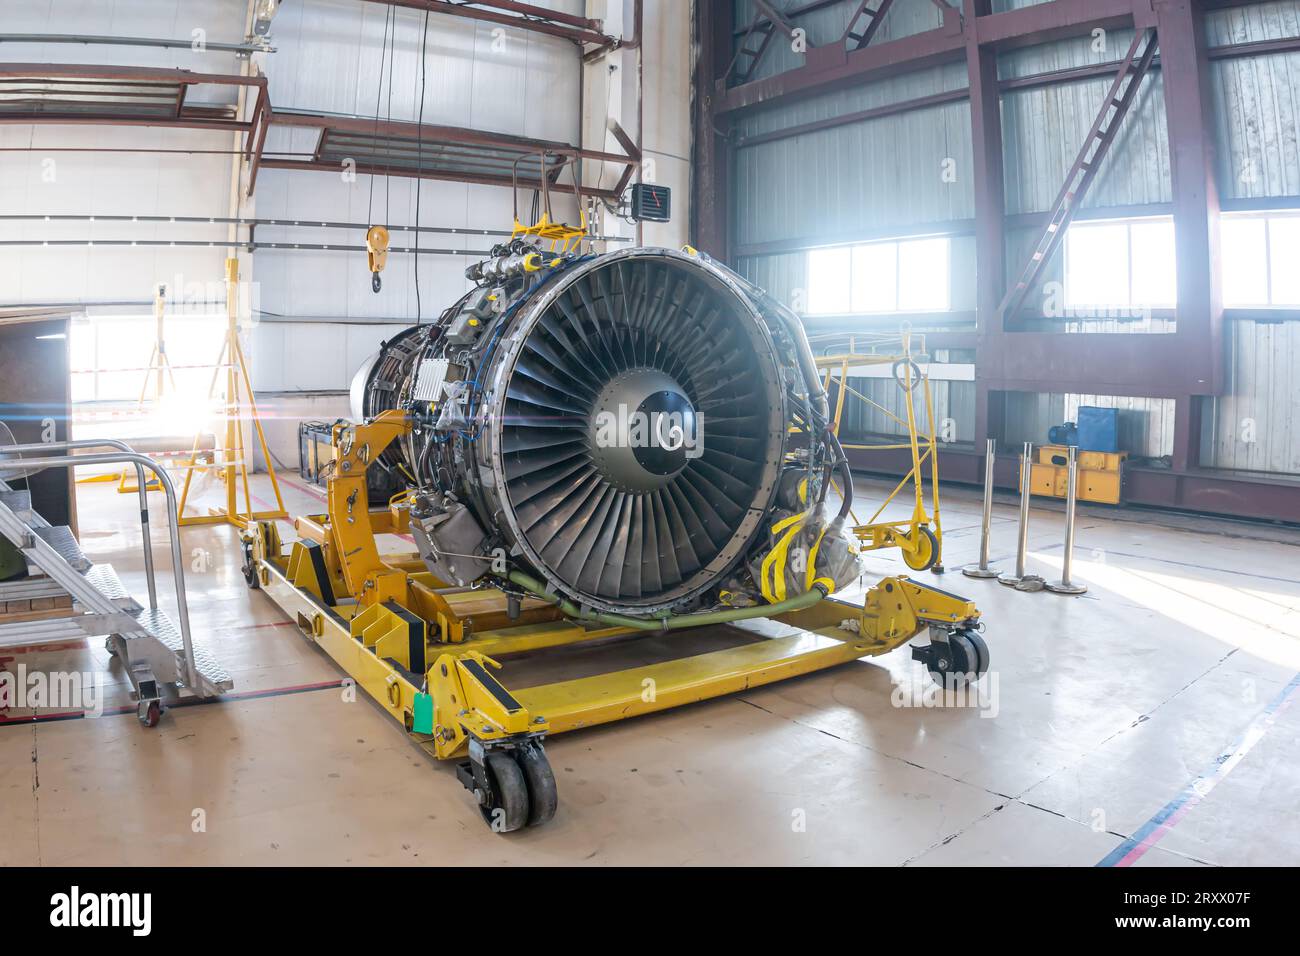 High-bypass turbofan airplane engine in aviation hangar Stock Photo